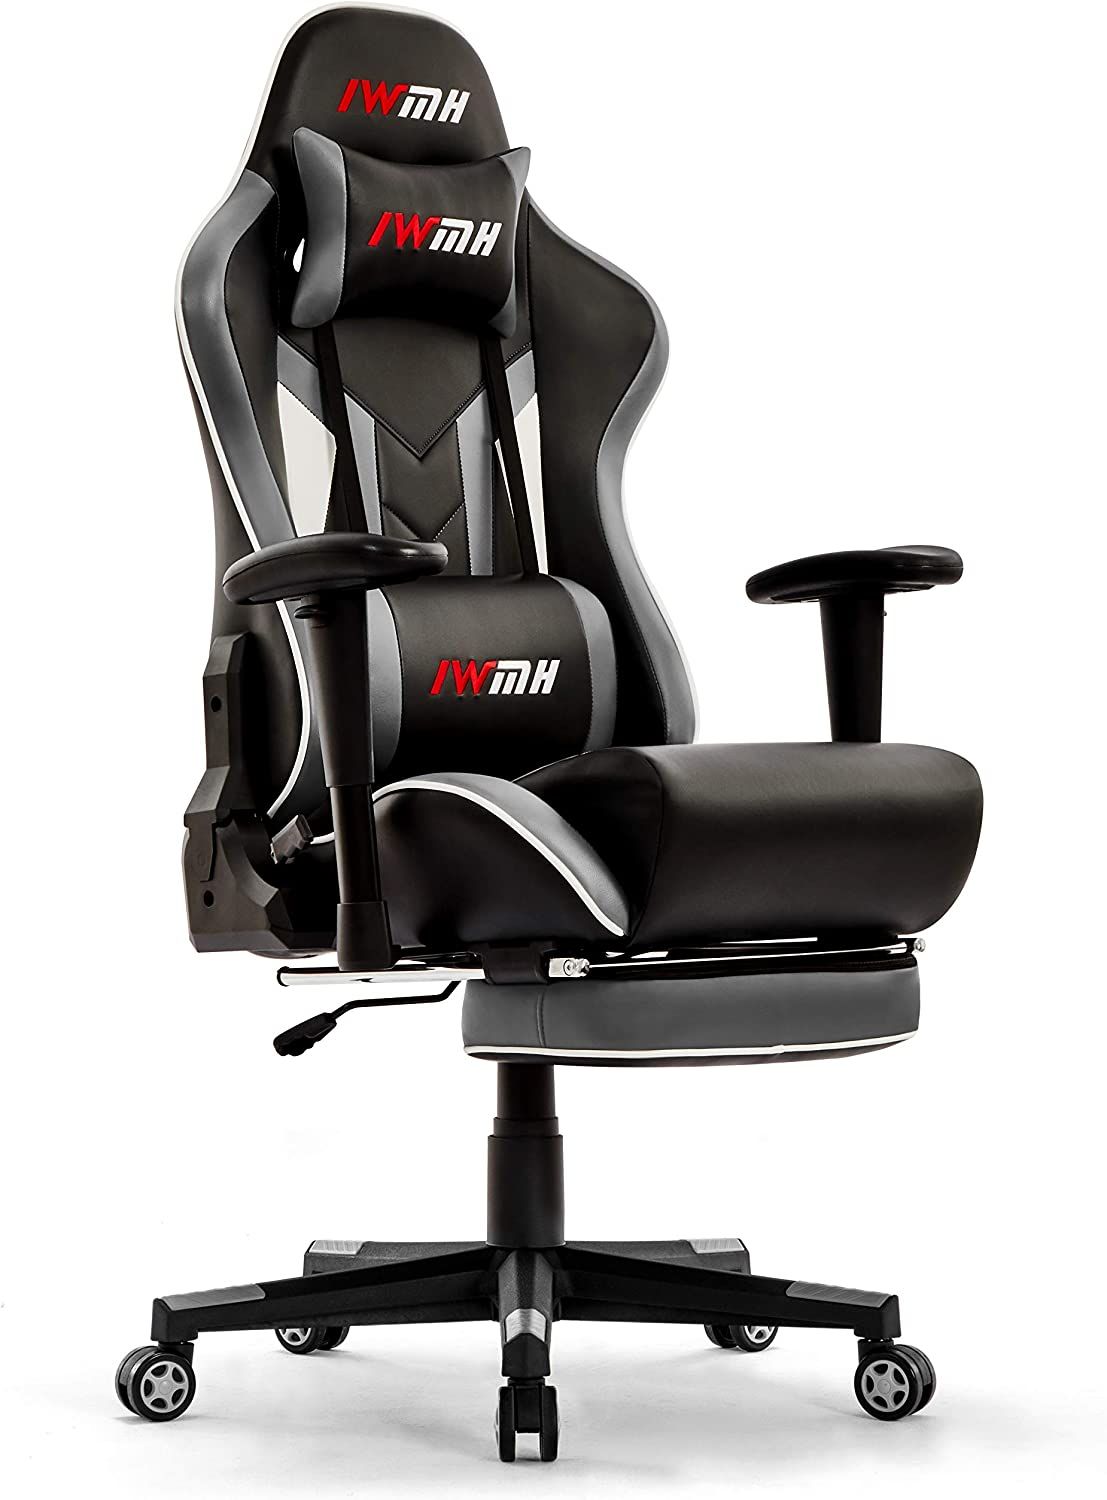 IWMH gaming chair, ergonomic racing chair